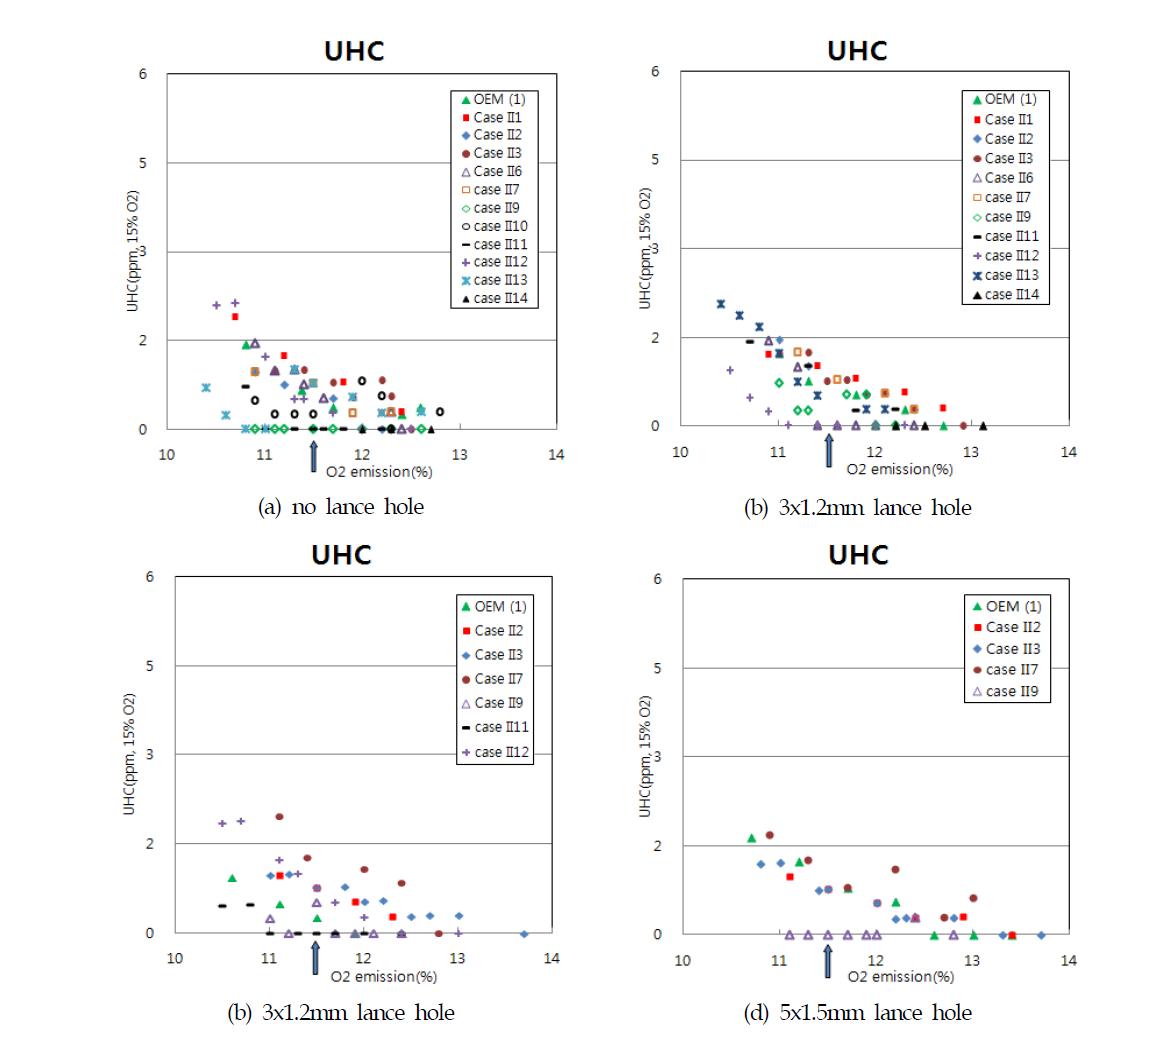 CO로부터 예상된 UHC의 배출 특성 (Case II)